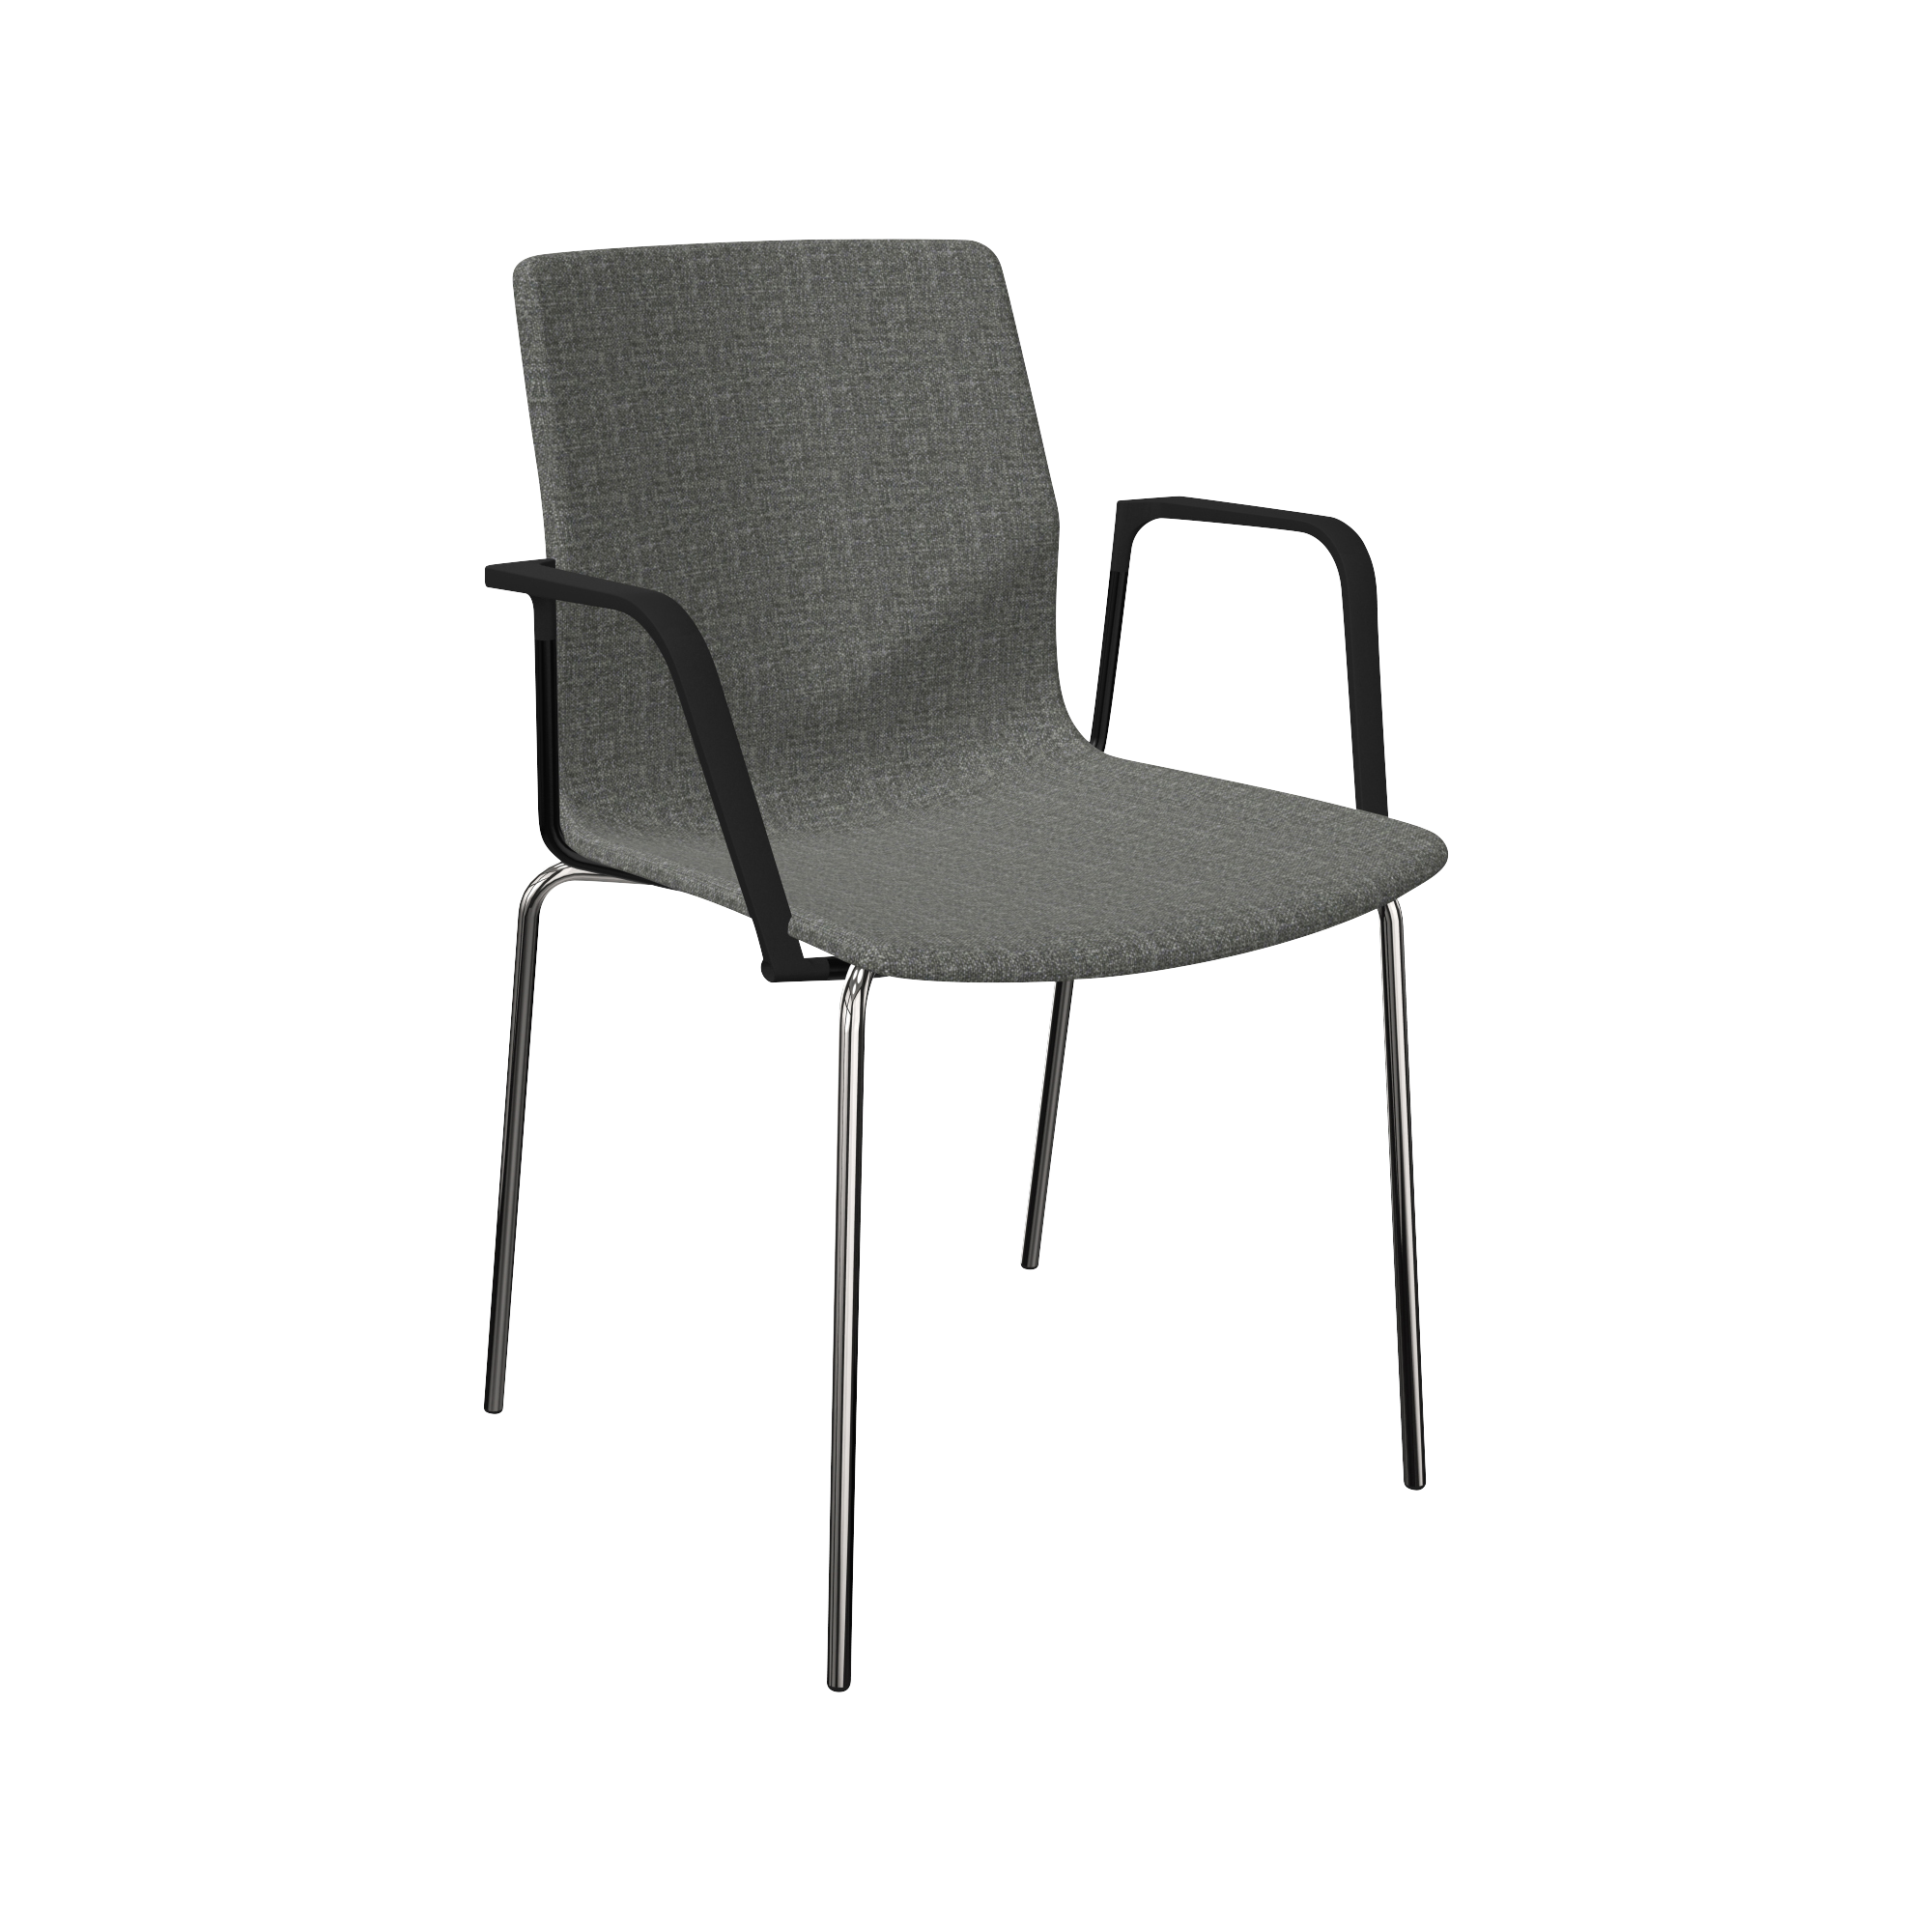 A grey designer desk chair with metal legs